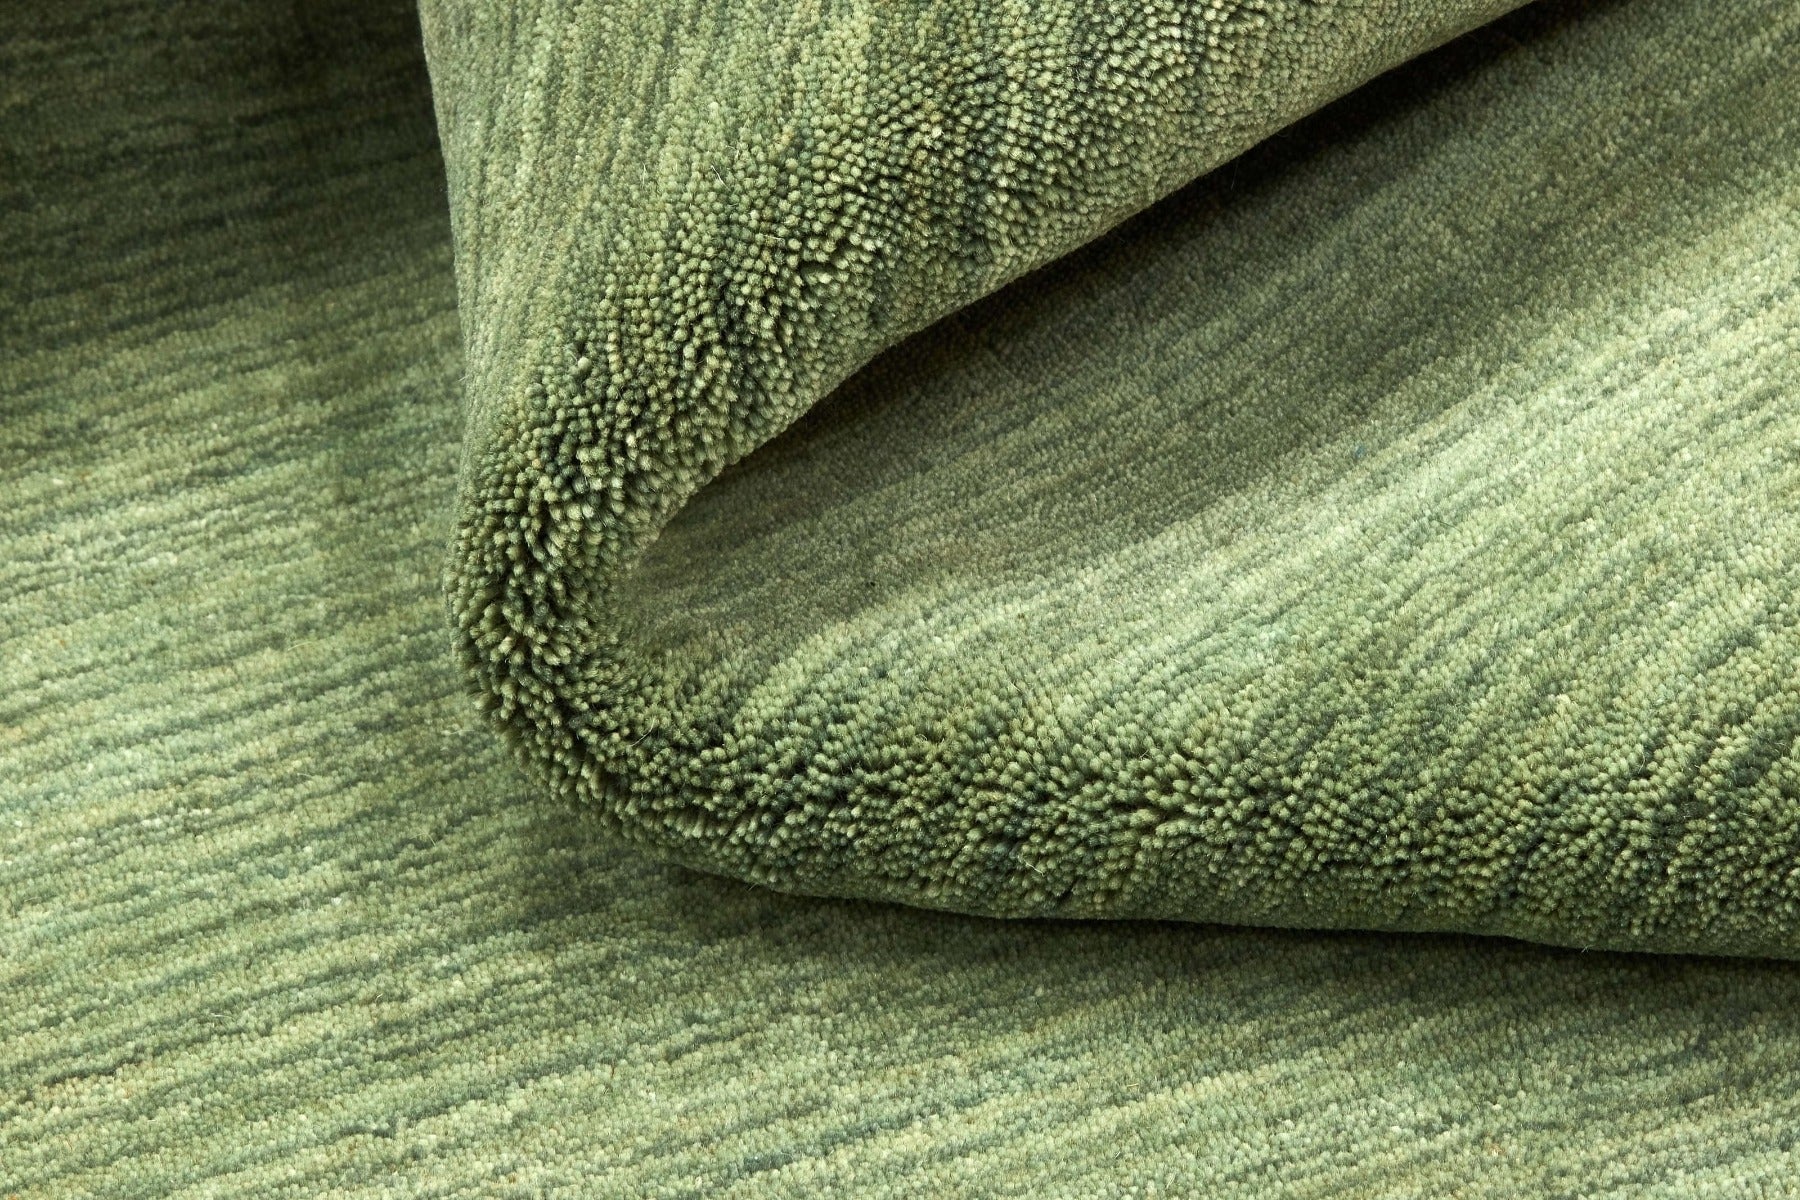 plain green wool area rug